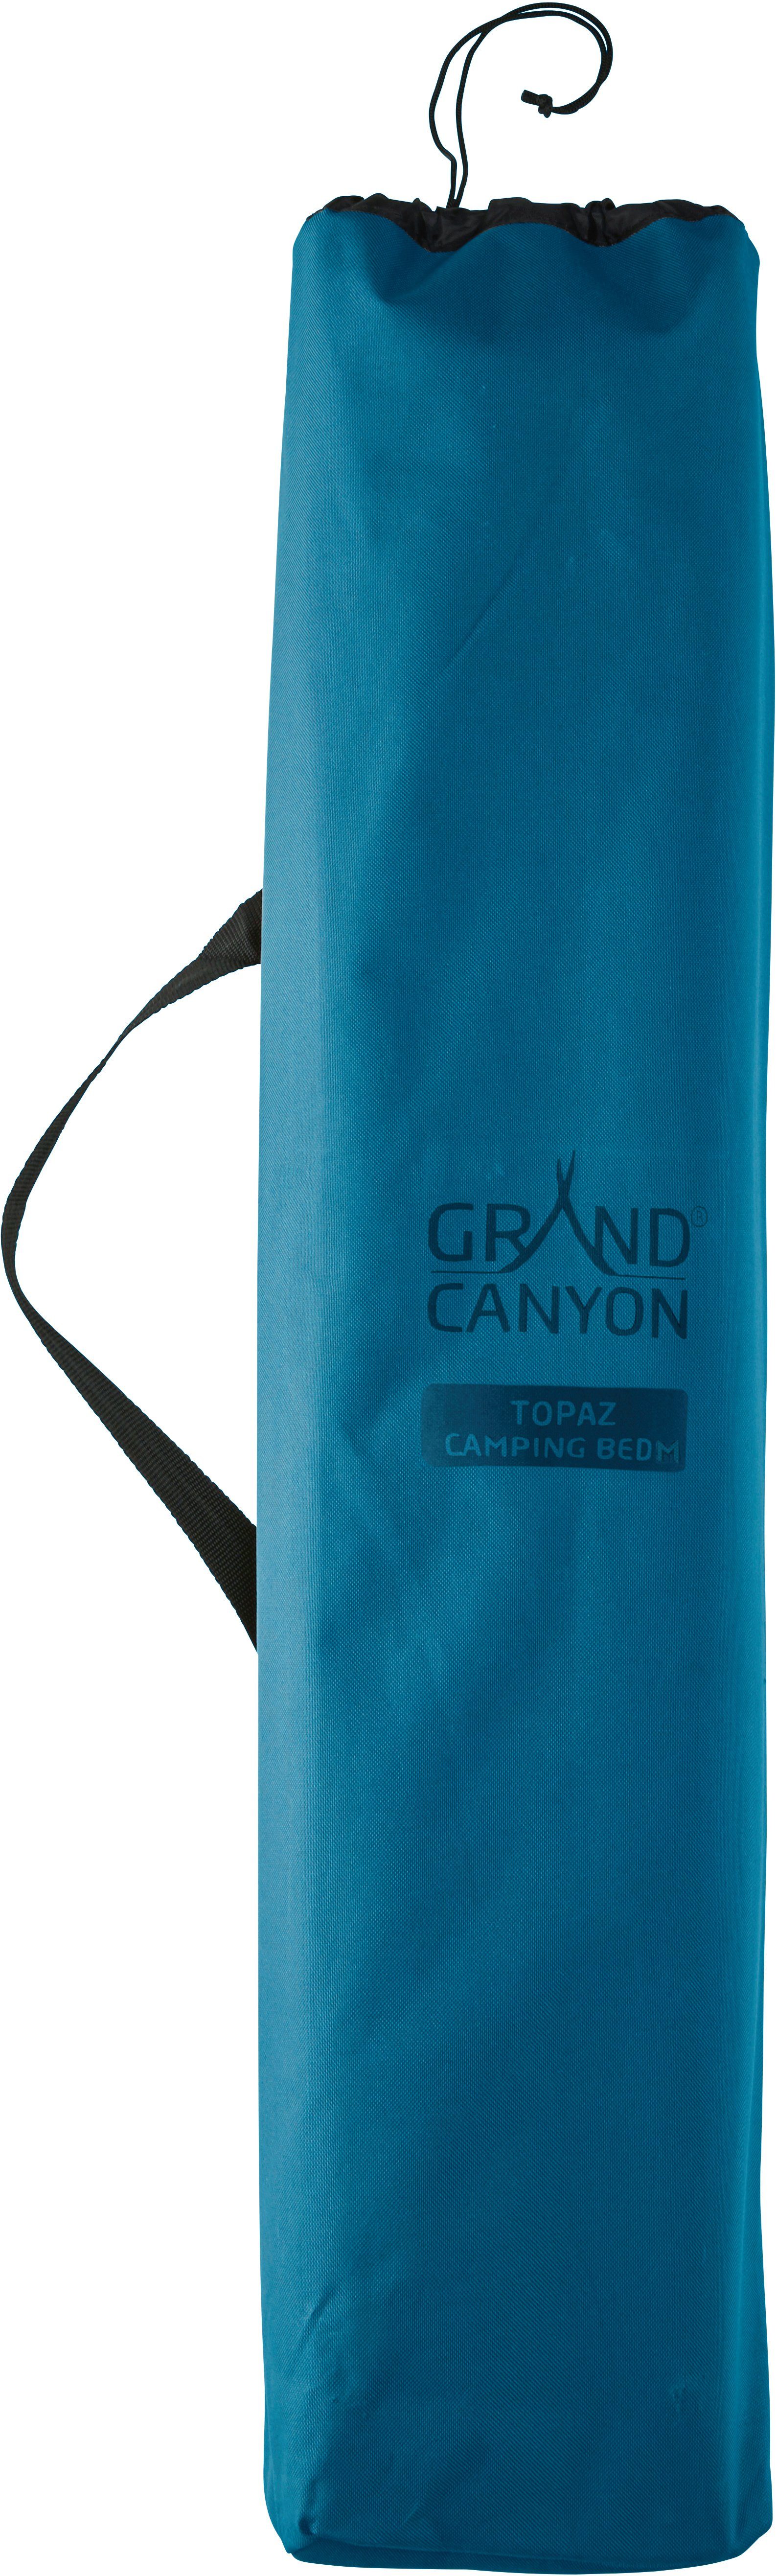 CAMPING Feldbett BED TOPAZ CANYON GRAND blau